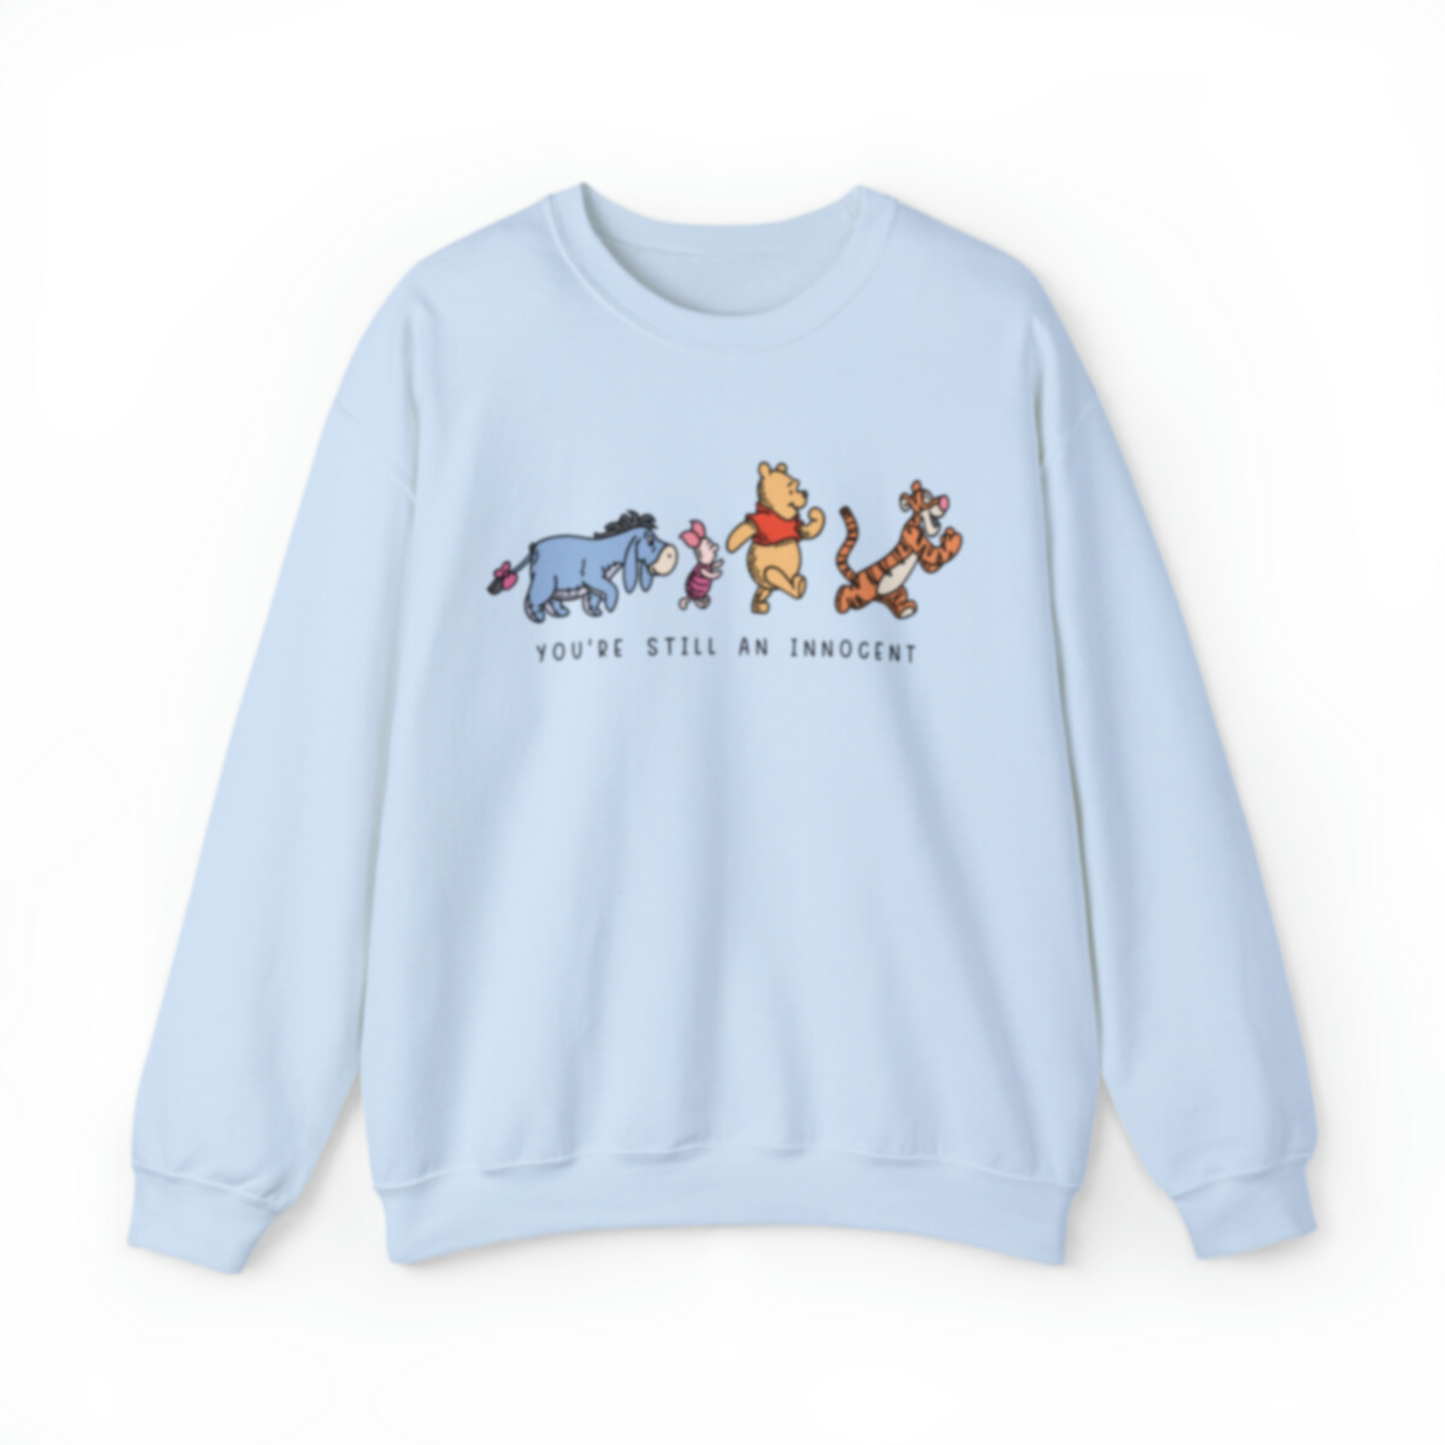 Innocent Sweatshirt | Adult Gildan Unisex